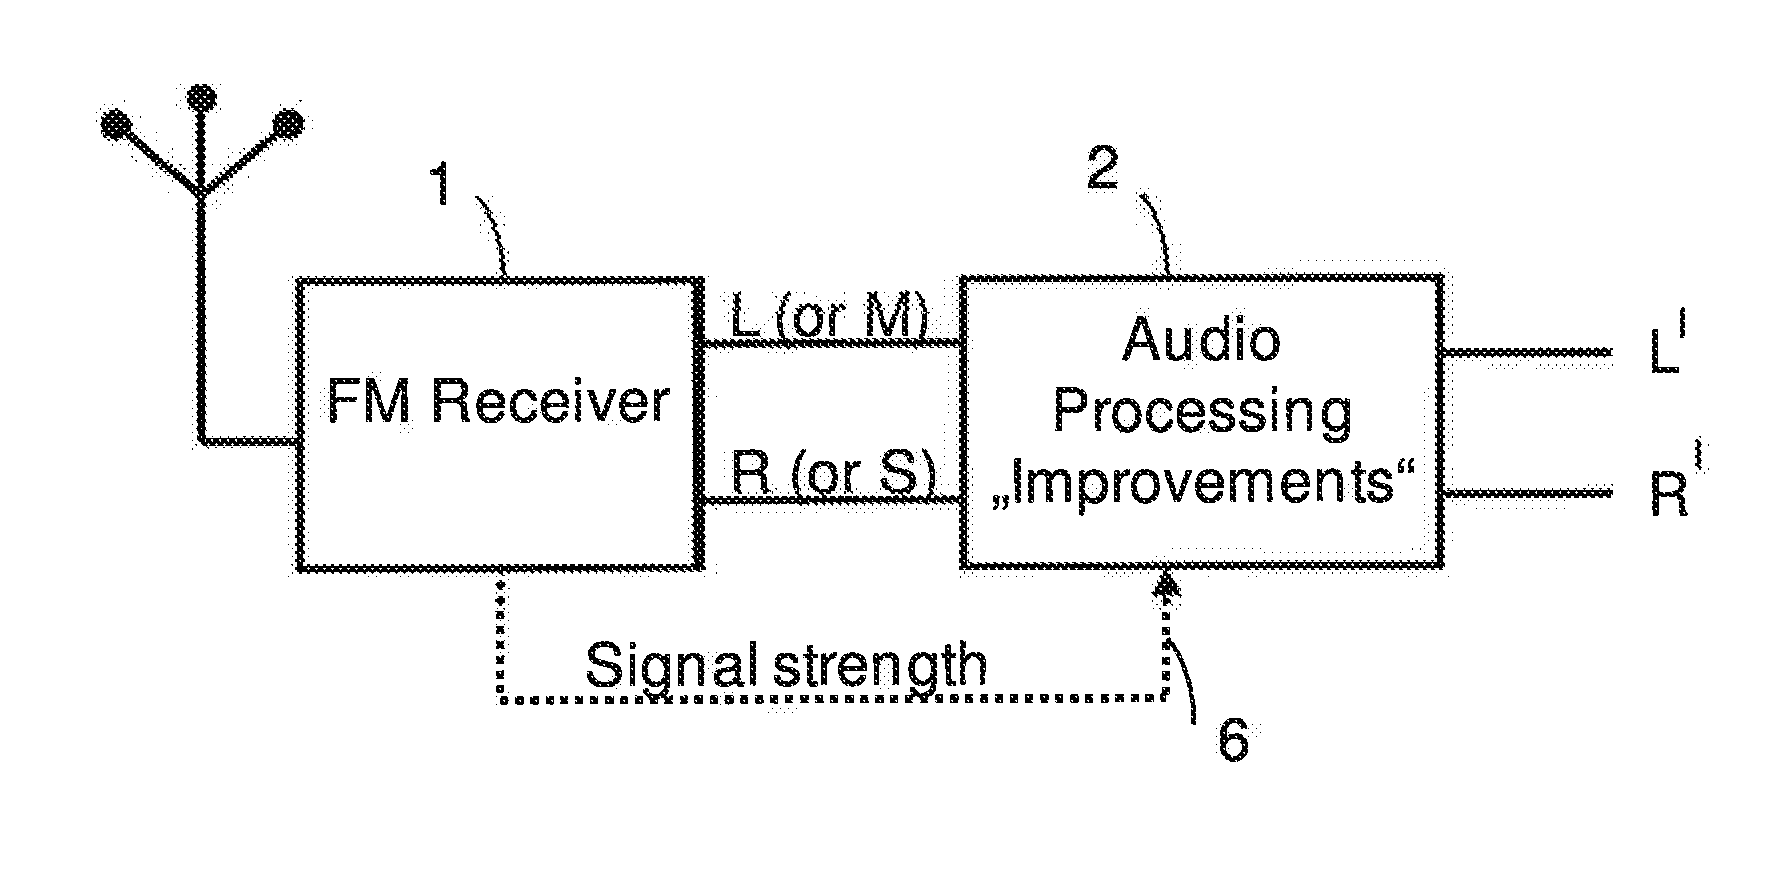 Concealment of intermittent mono reception of FM stereo radio receivers